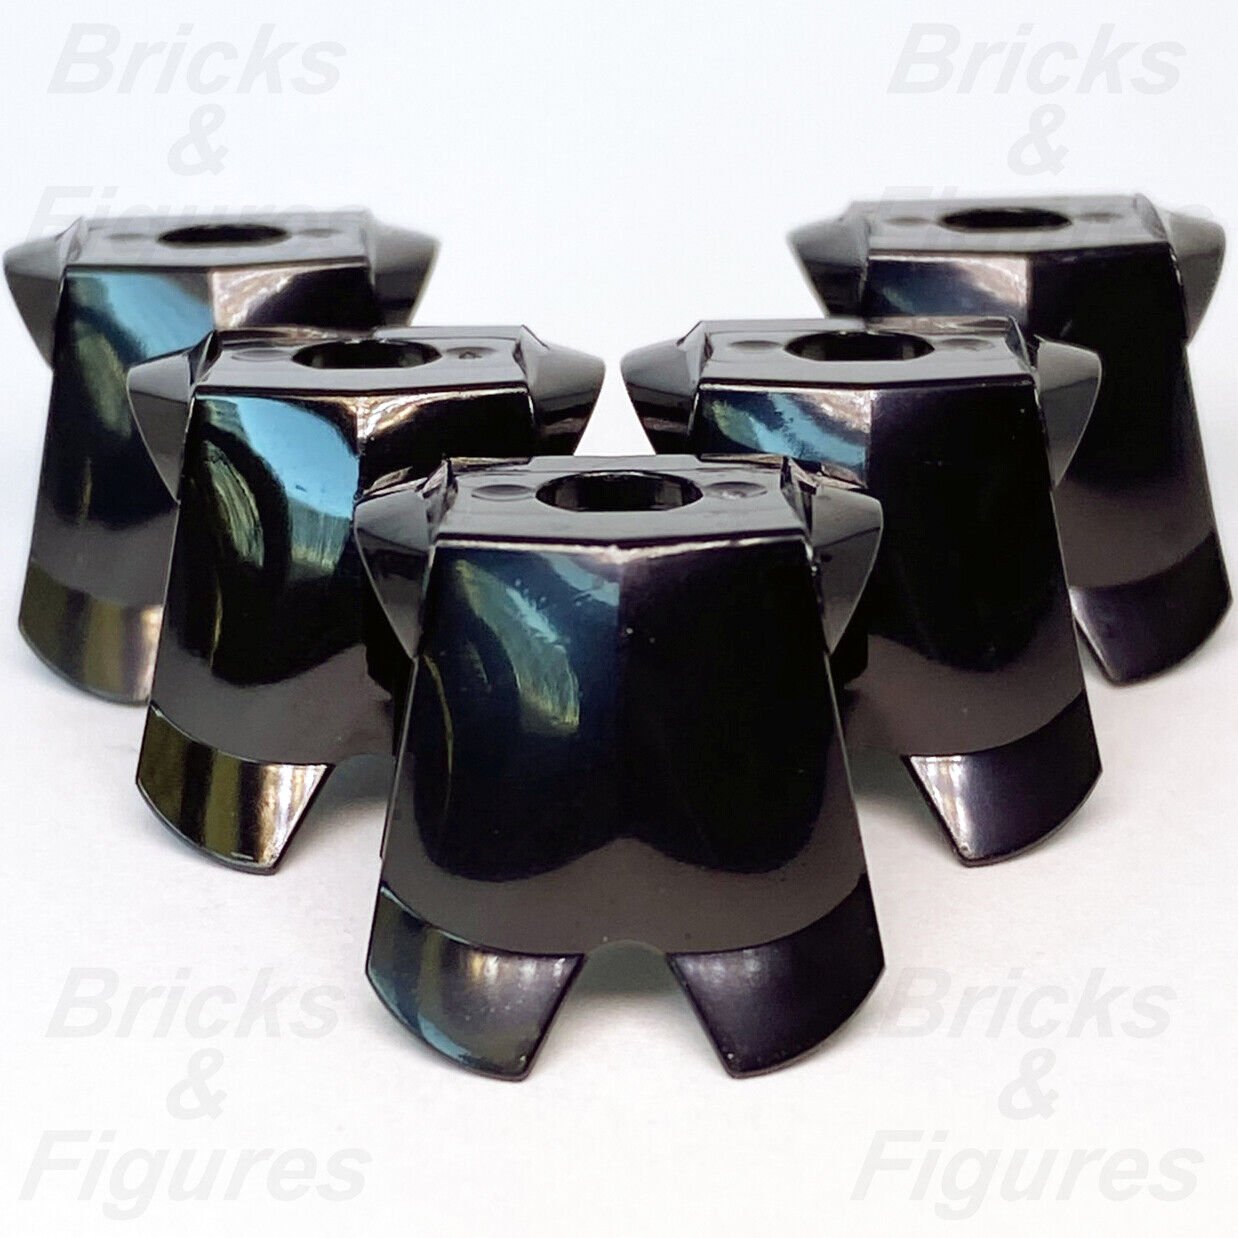 5 x LEGO Breastplate Armour Castle Knight Black Minifigure Part 2587 33468 New - Bricks & Figures